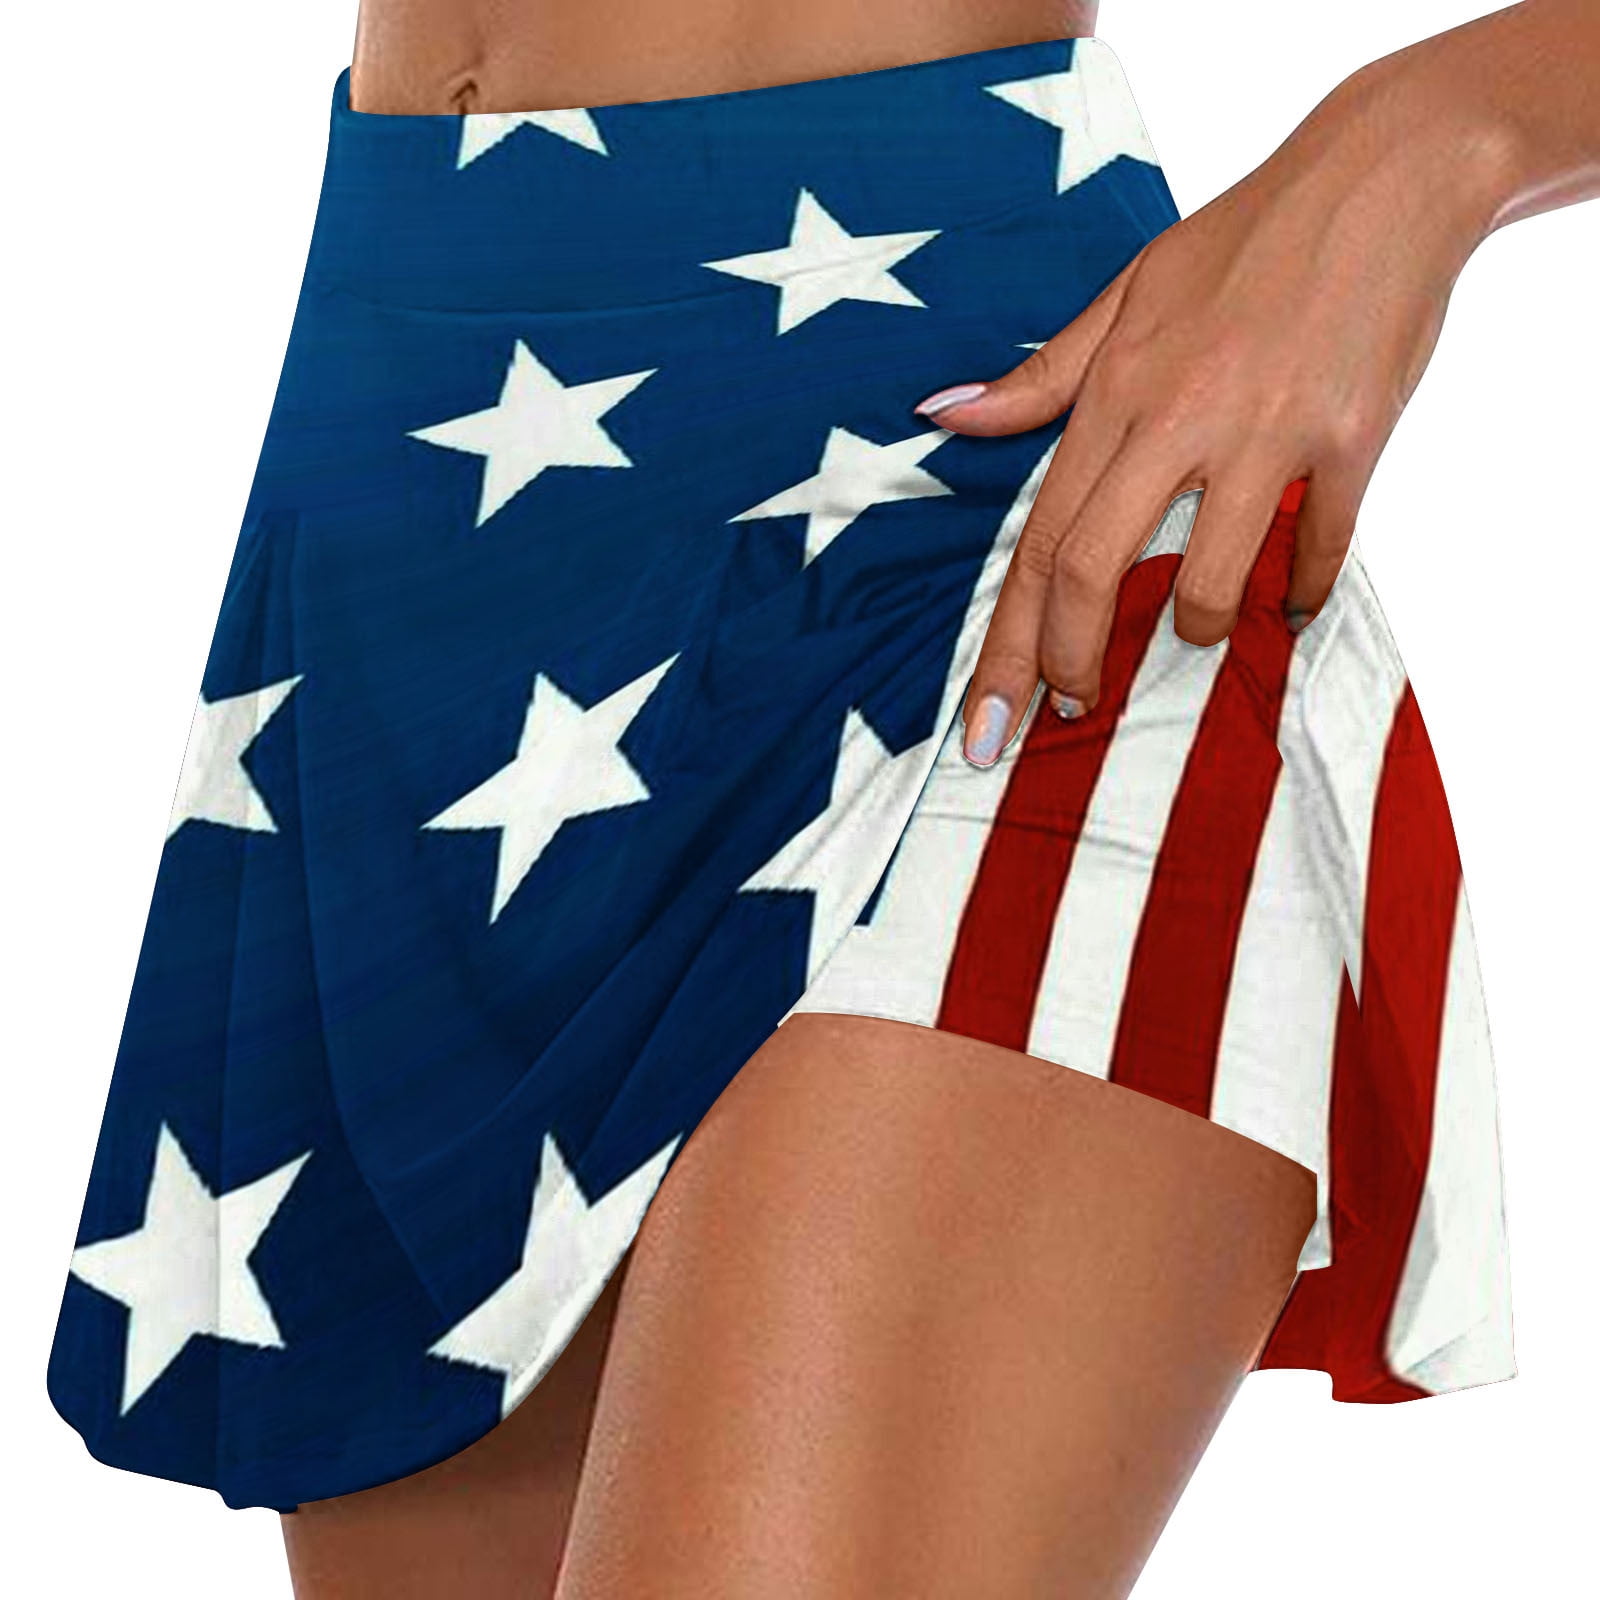 Tennis Skirt for Women Stretchy High Waisted Star Stripes Print ...